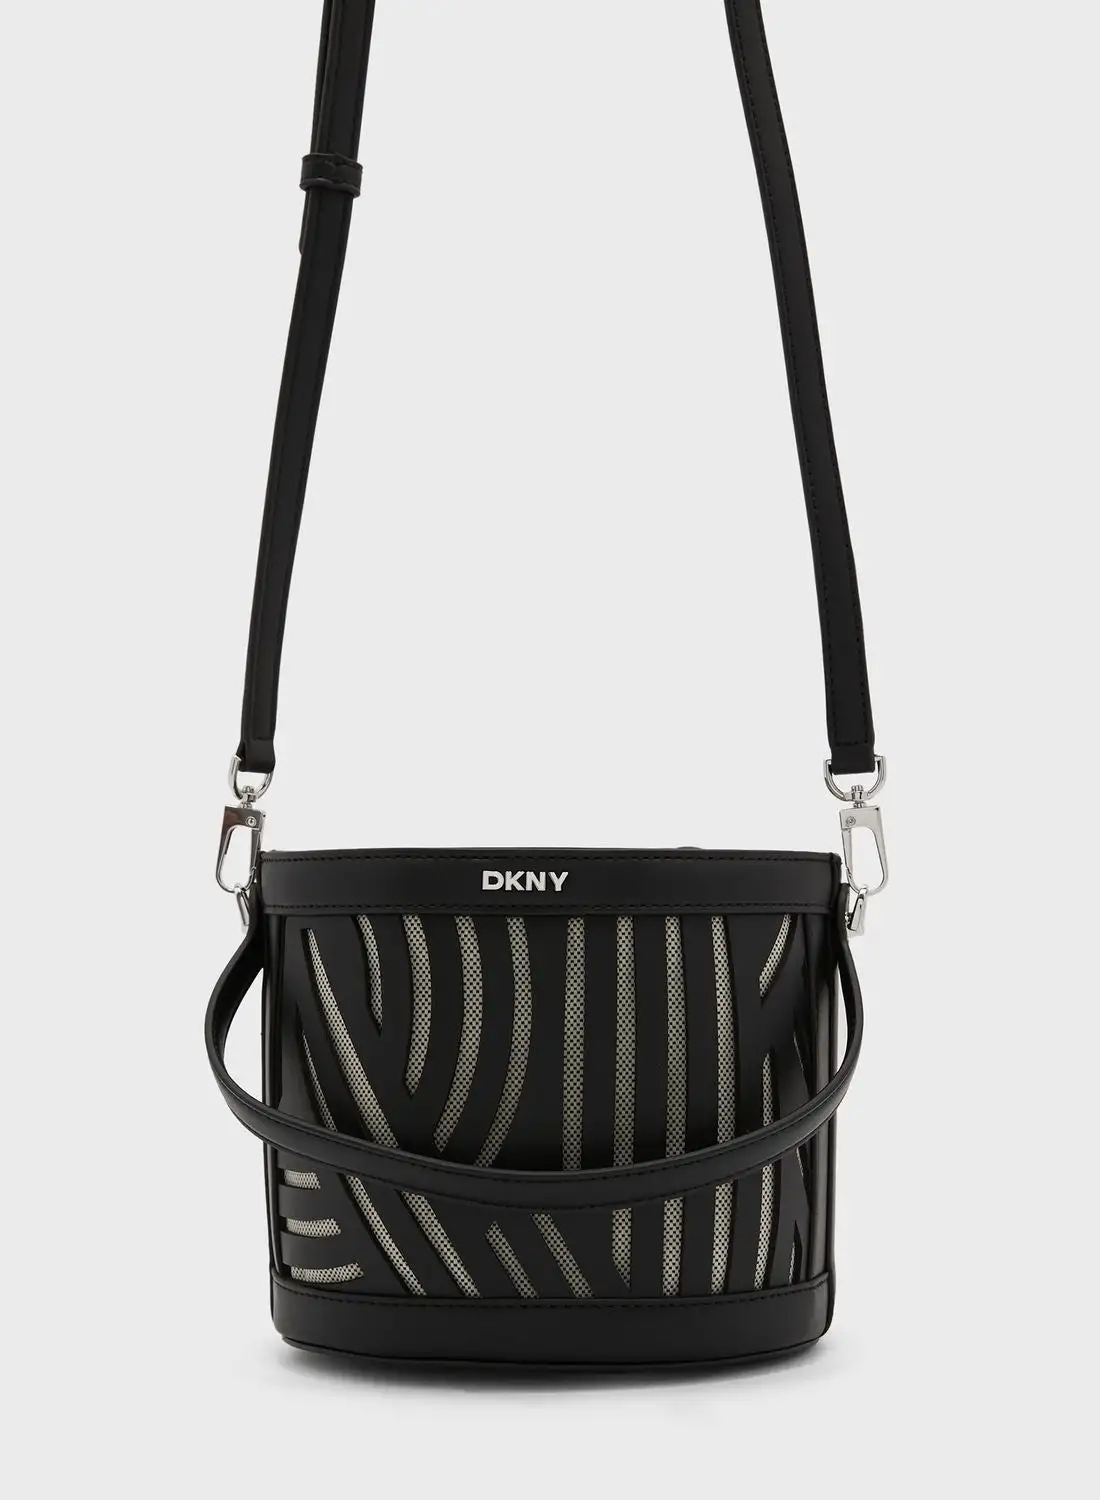 DKNY Hildi Bucket Crossbody Bags